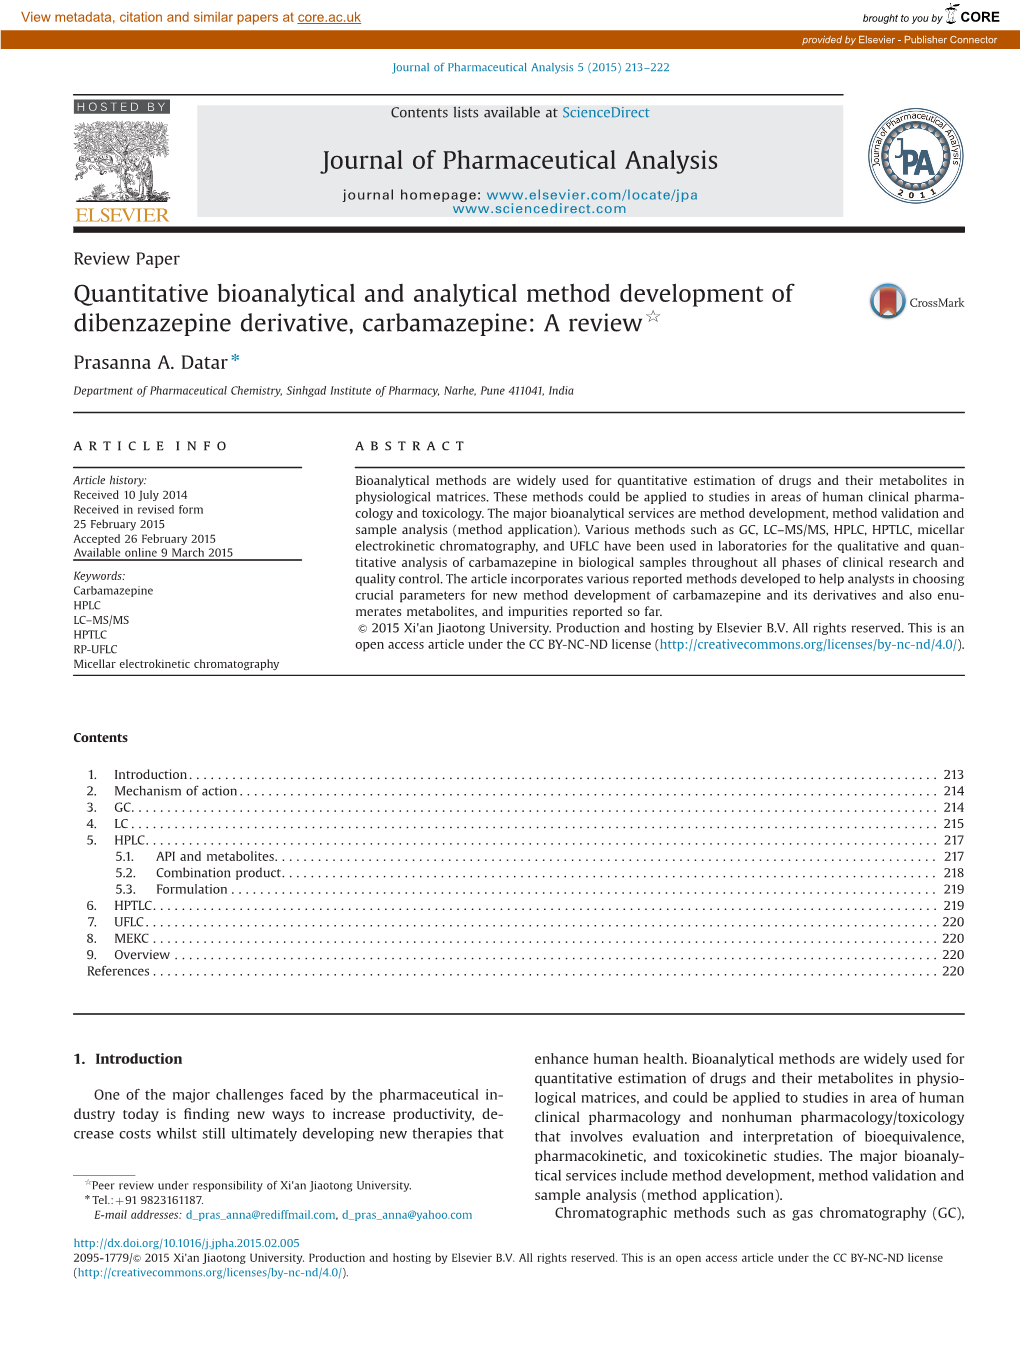 Quantitative Bioanalytical and Analytical Method Development of Dibenzazepine Derivative, Carbamazepine: a Review$